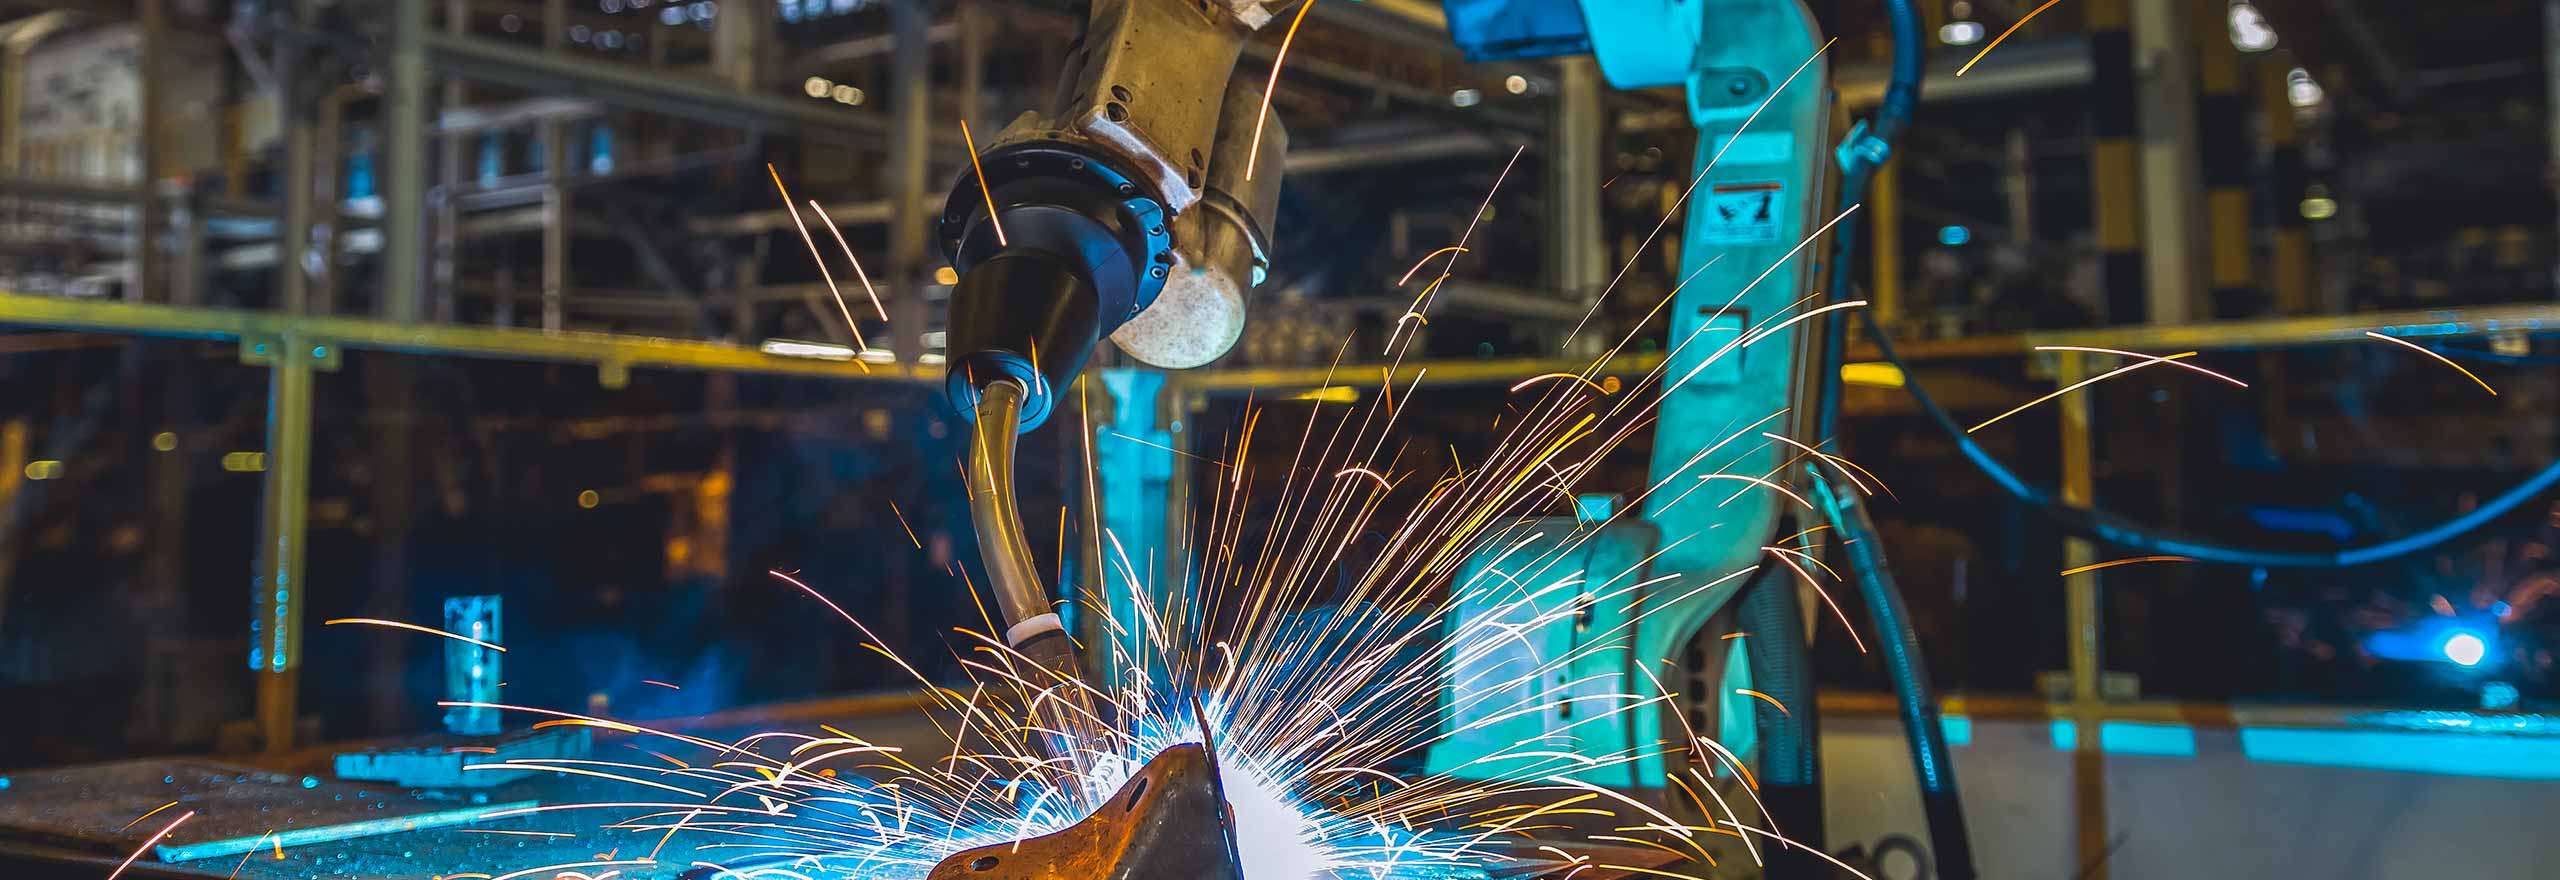 Industrial robot welding a car part in a factory 